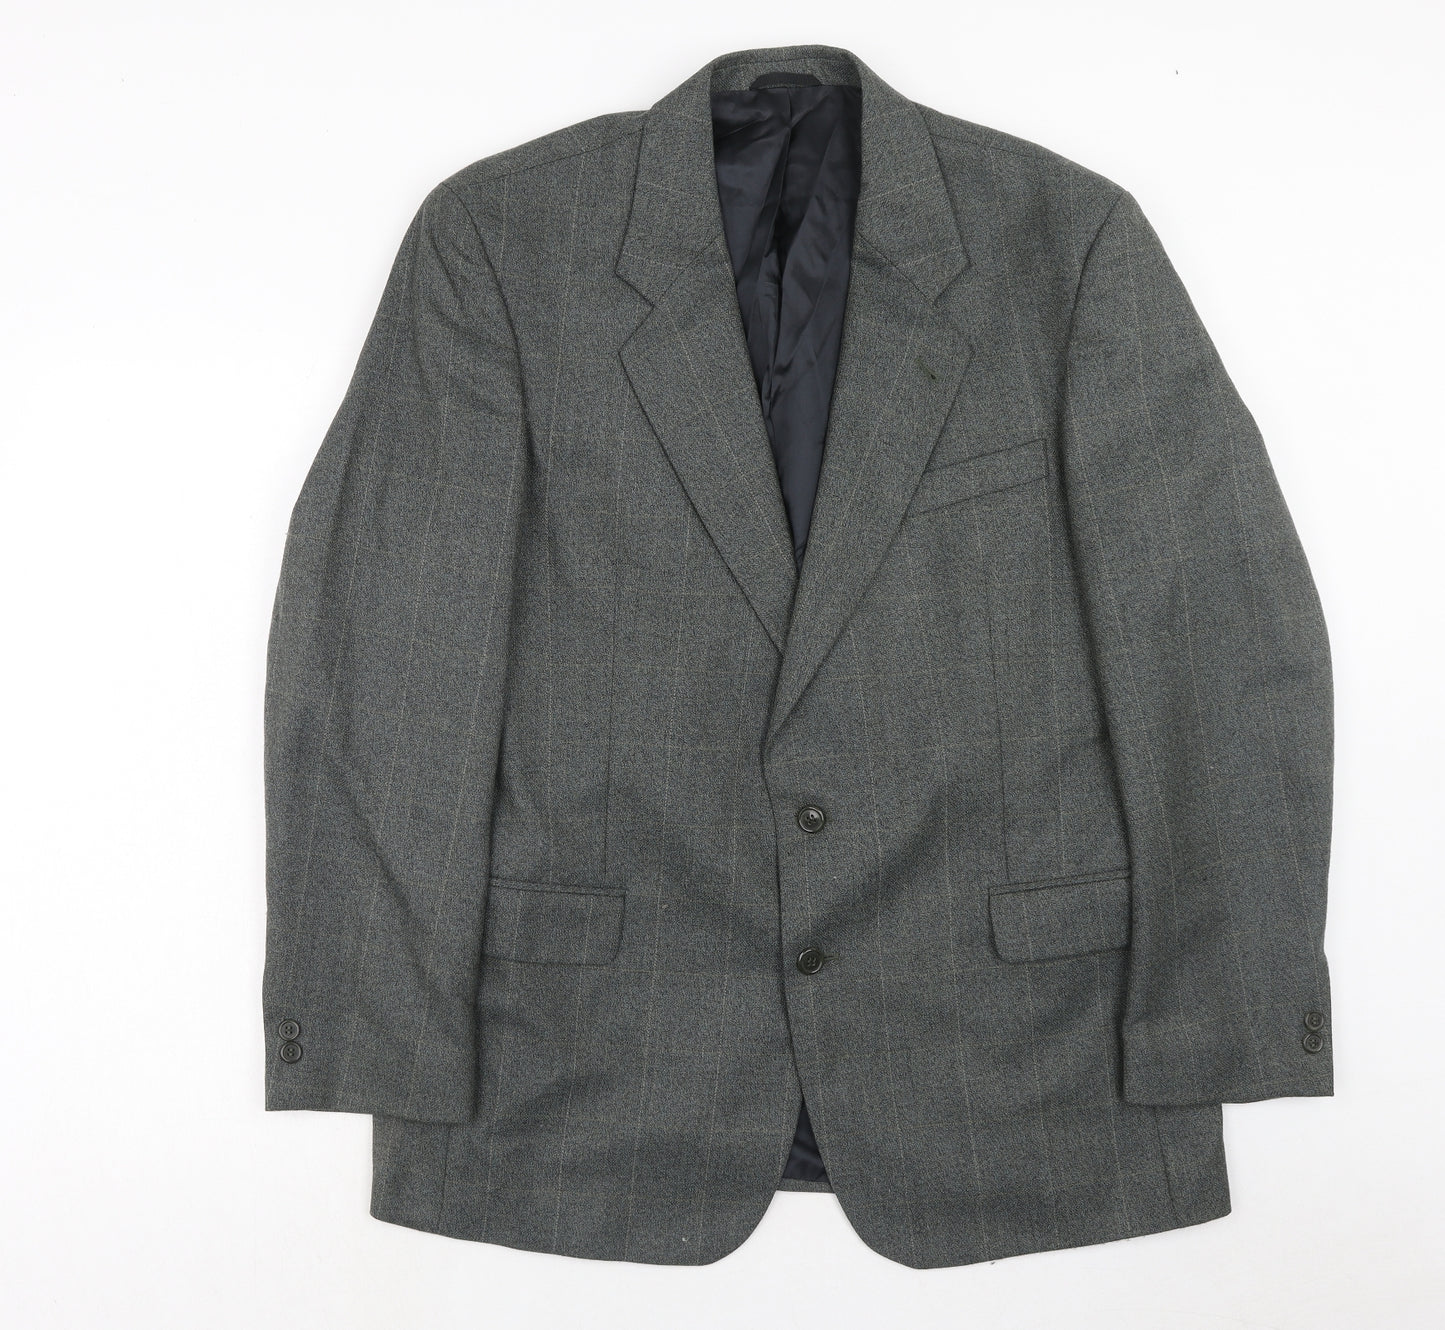 Periscope Mens Grey Check Polyester Jacket Suit Jacket Size 44 Regular